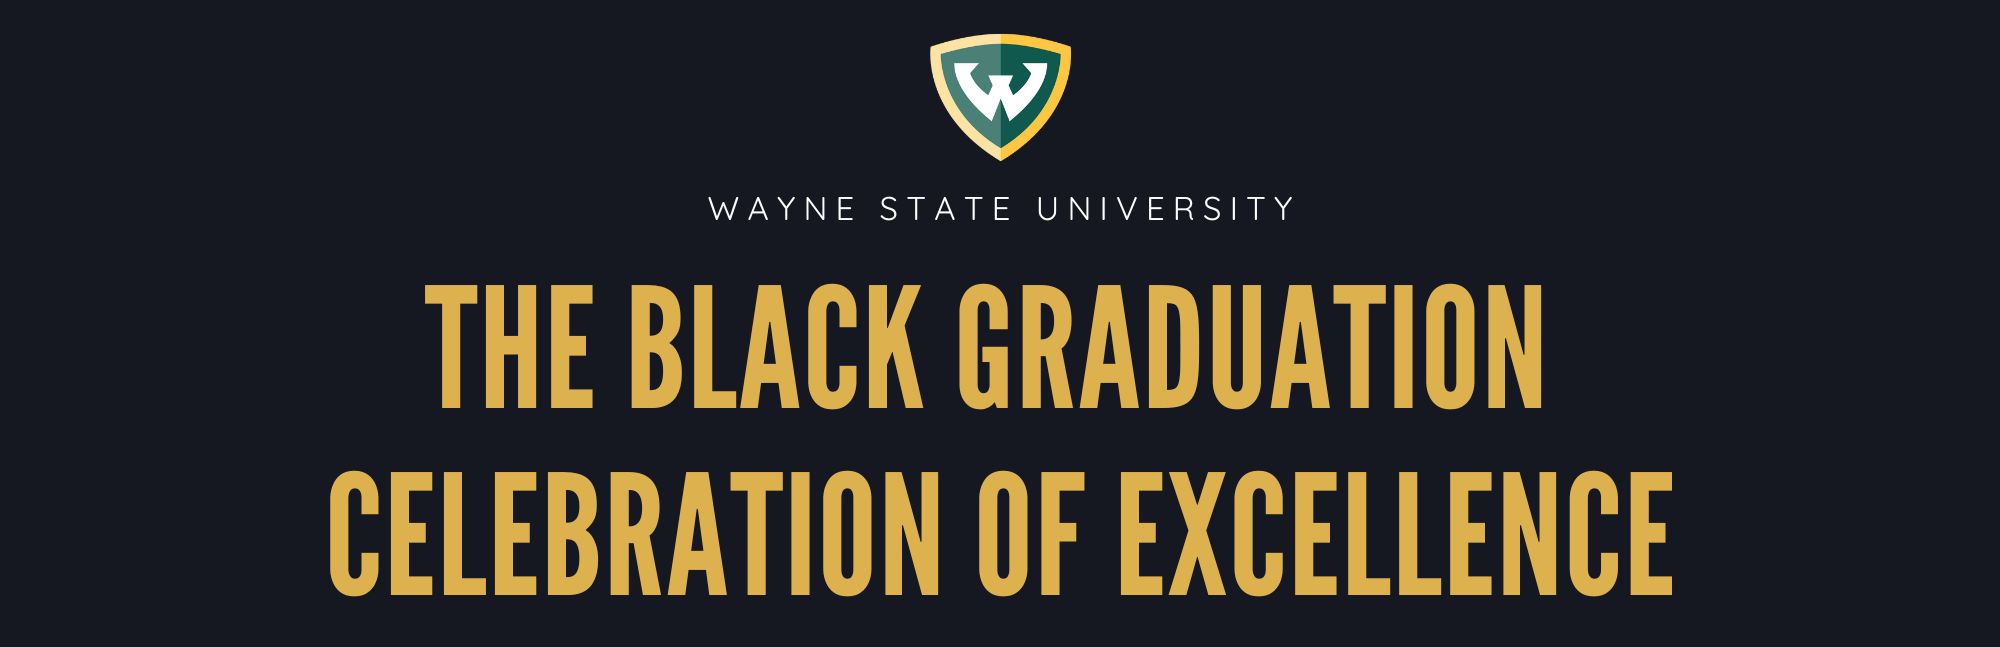 Wayne State University The Black Graduation Celebration of Excellence